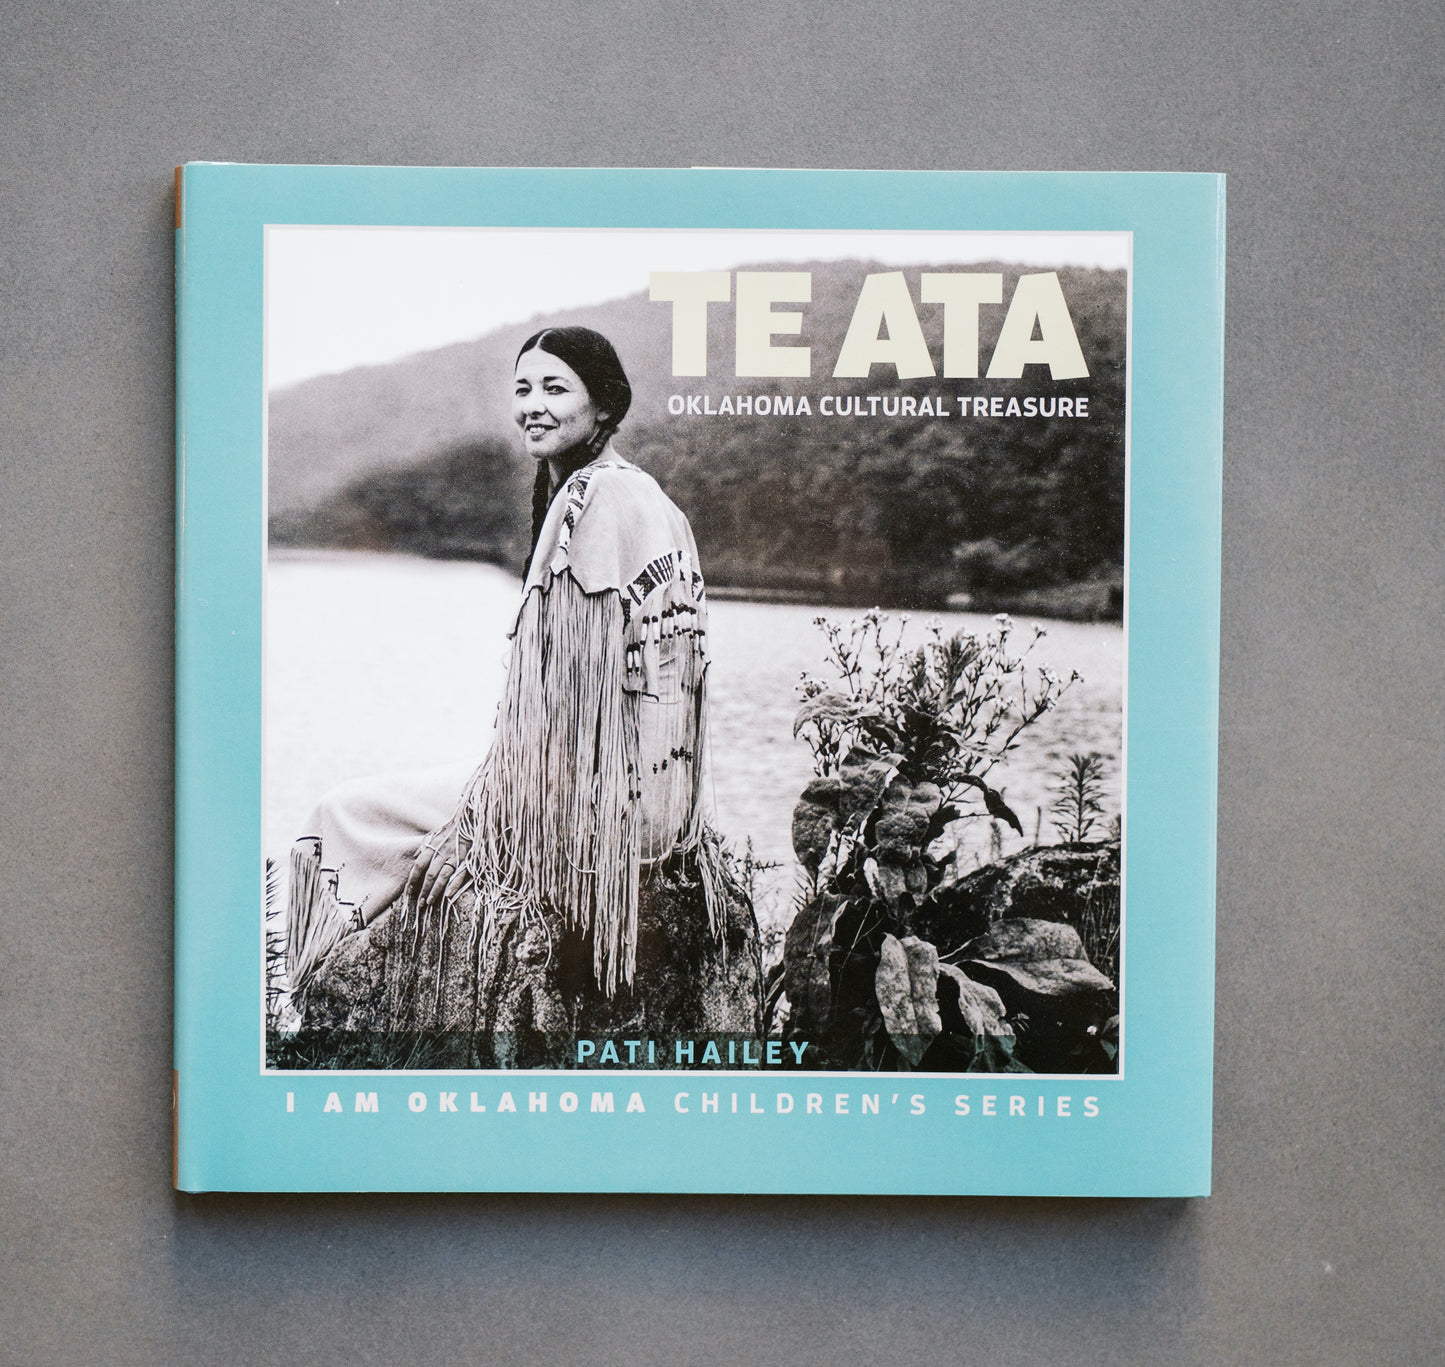 Te Ata: Oklahoma Cultural Treasure, I Am Oklahoma Children's Series